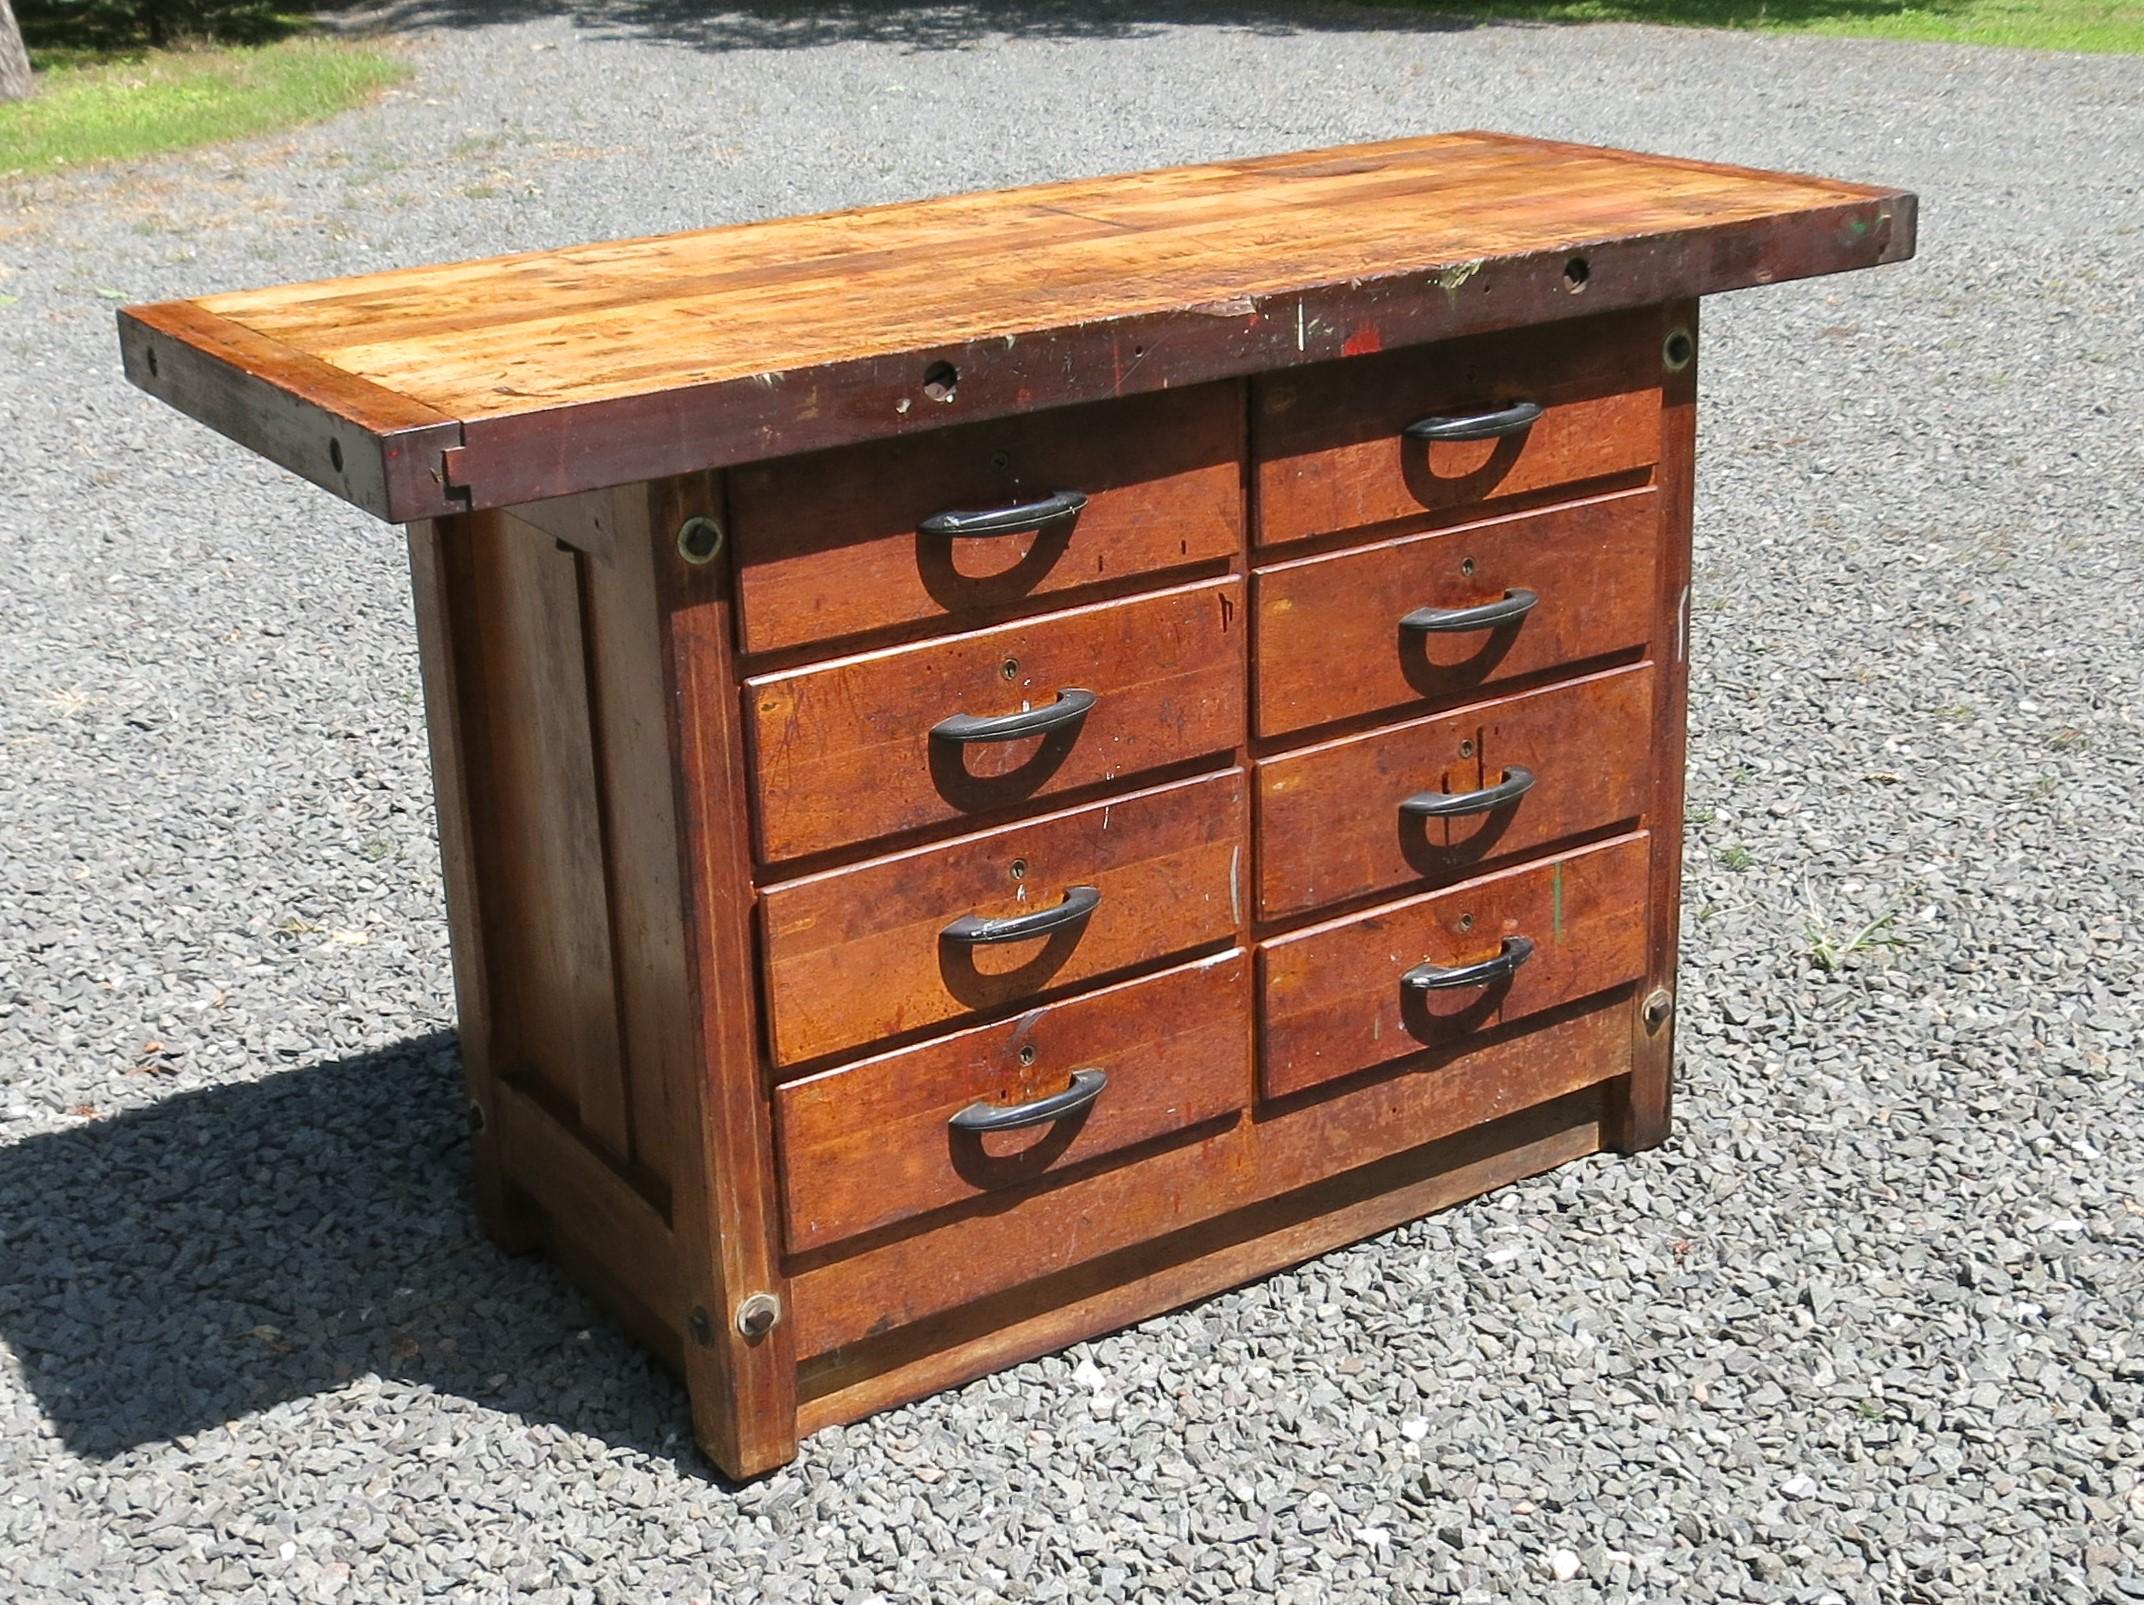 E. H. Sheldon wood workbench. 8 drawers. It is 22.25